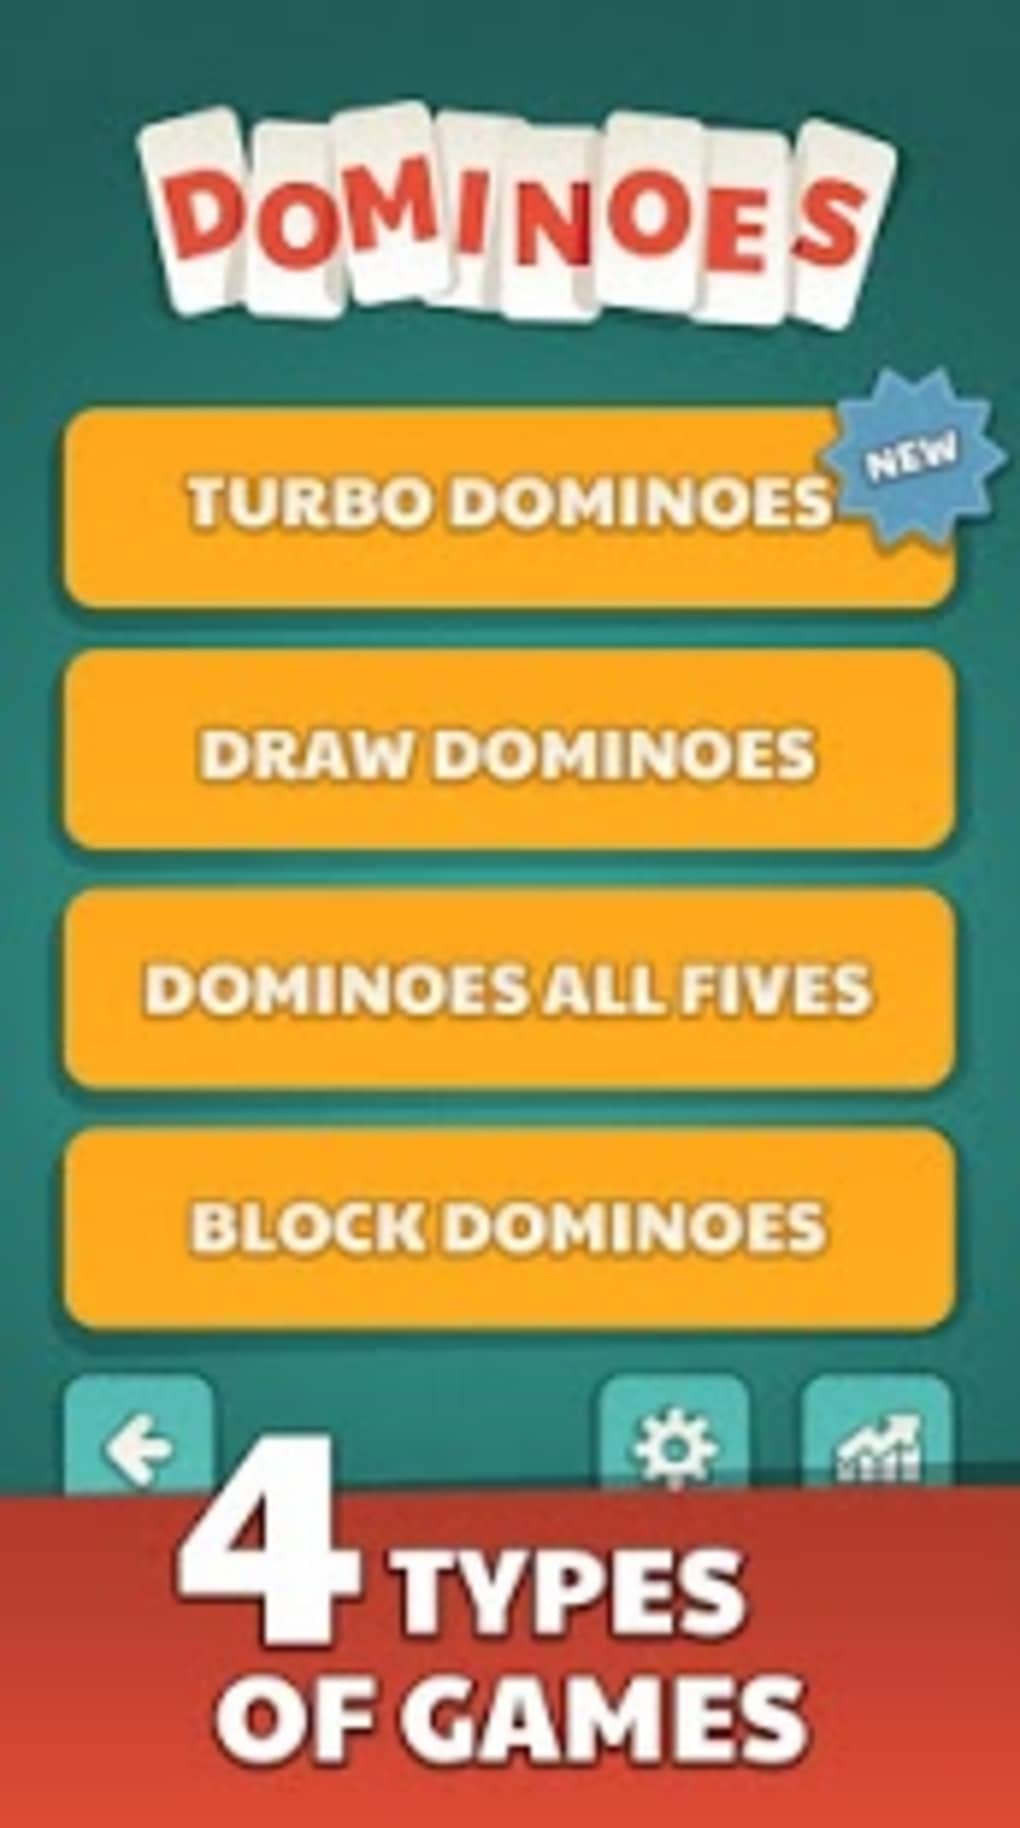 Dominos Online Jogatina: Dominoes Game Free APK para Android